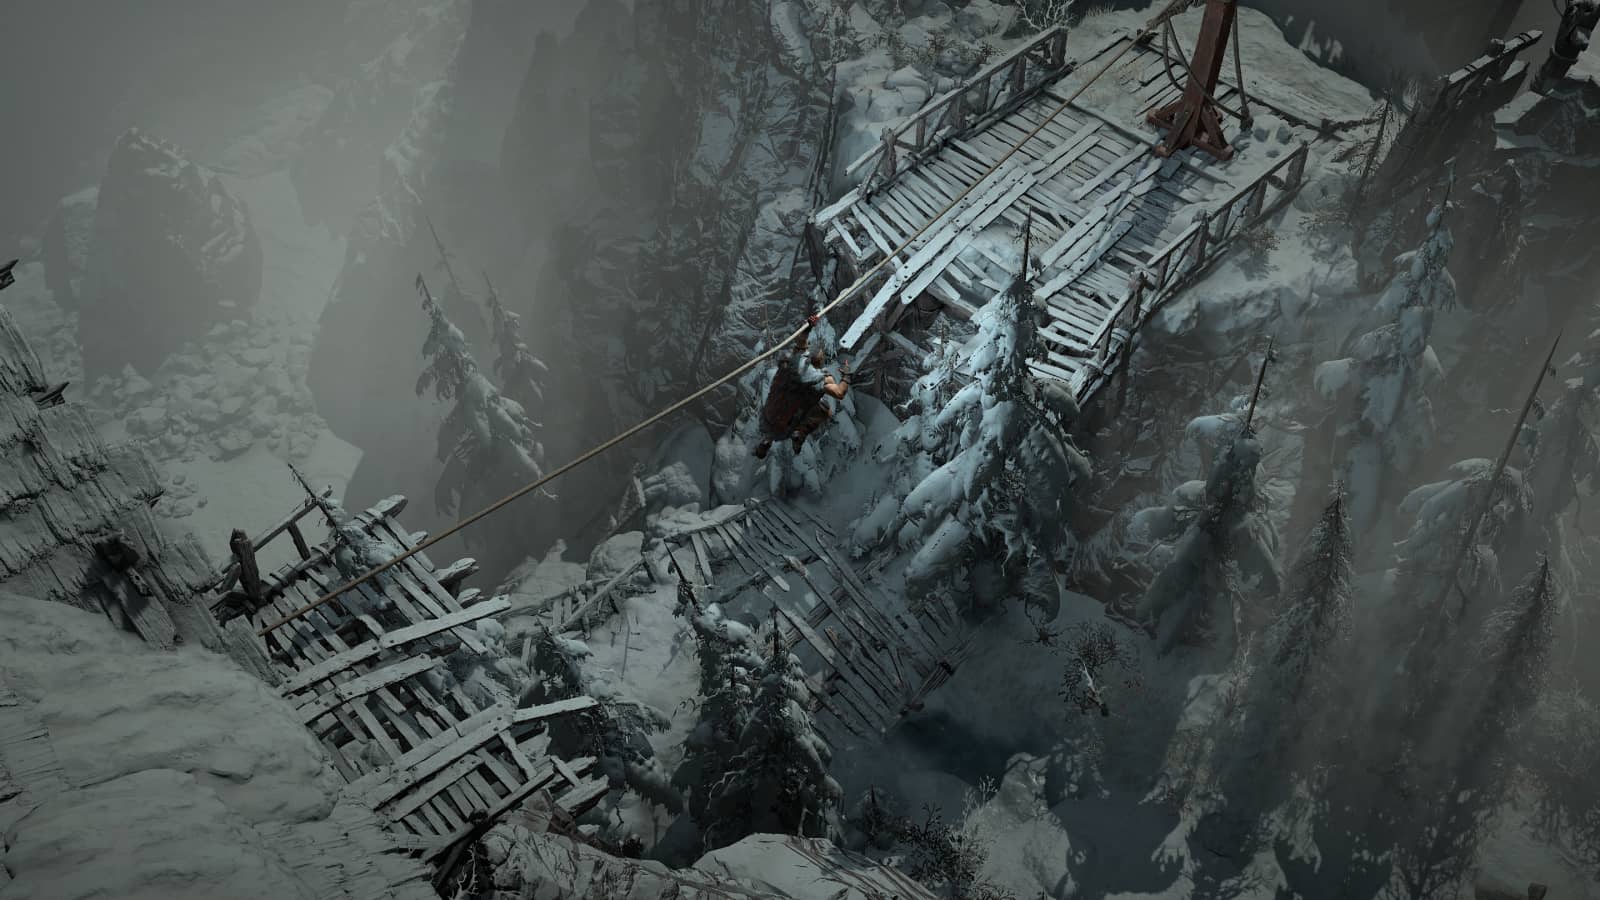 Diablo 4 beta players report GPU issues, Blizzard investigating